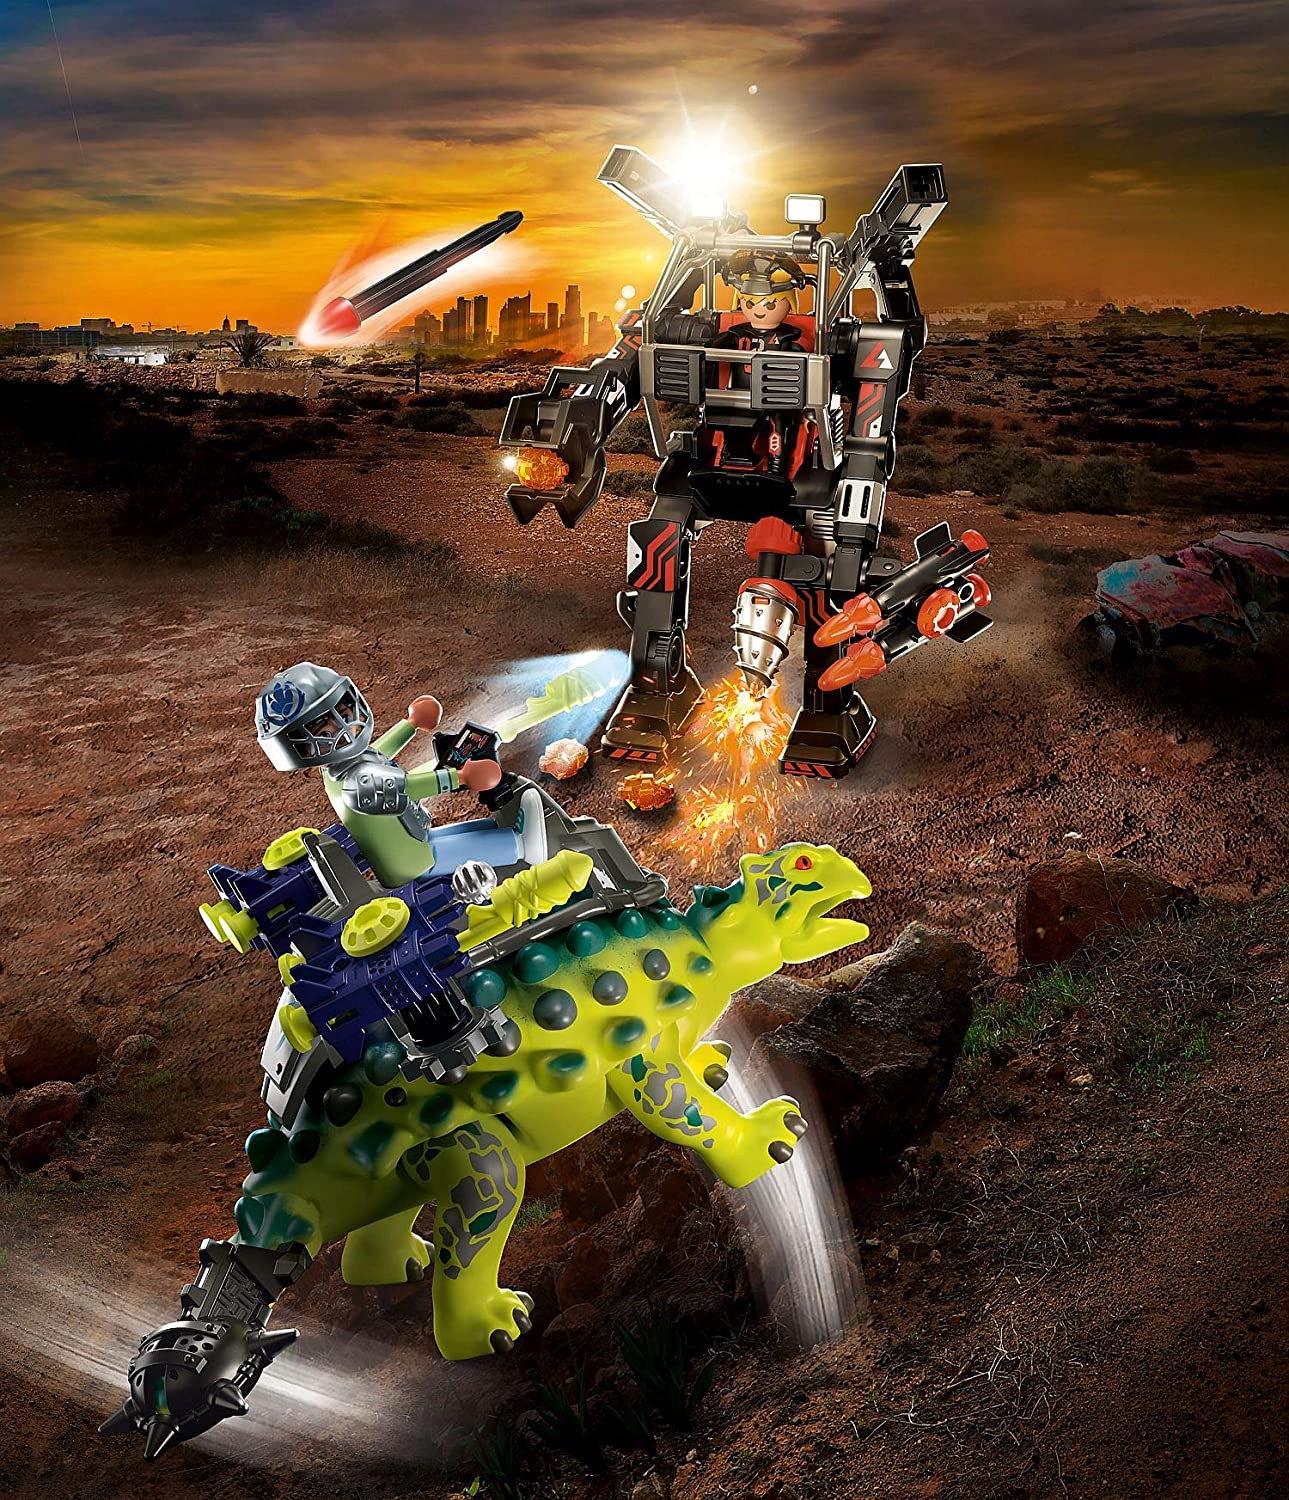 Playmobil Dino Rise Saichania: Invasion of The Robot